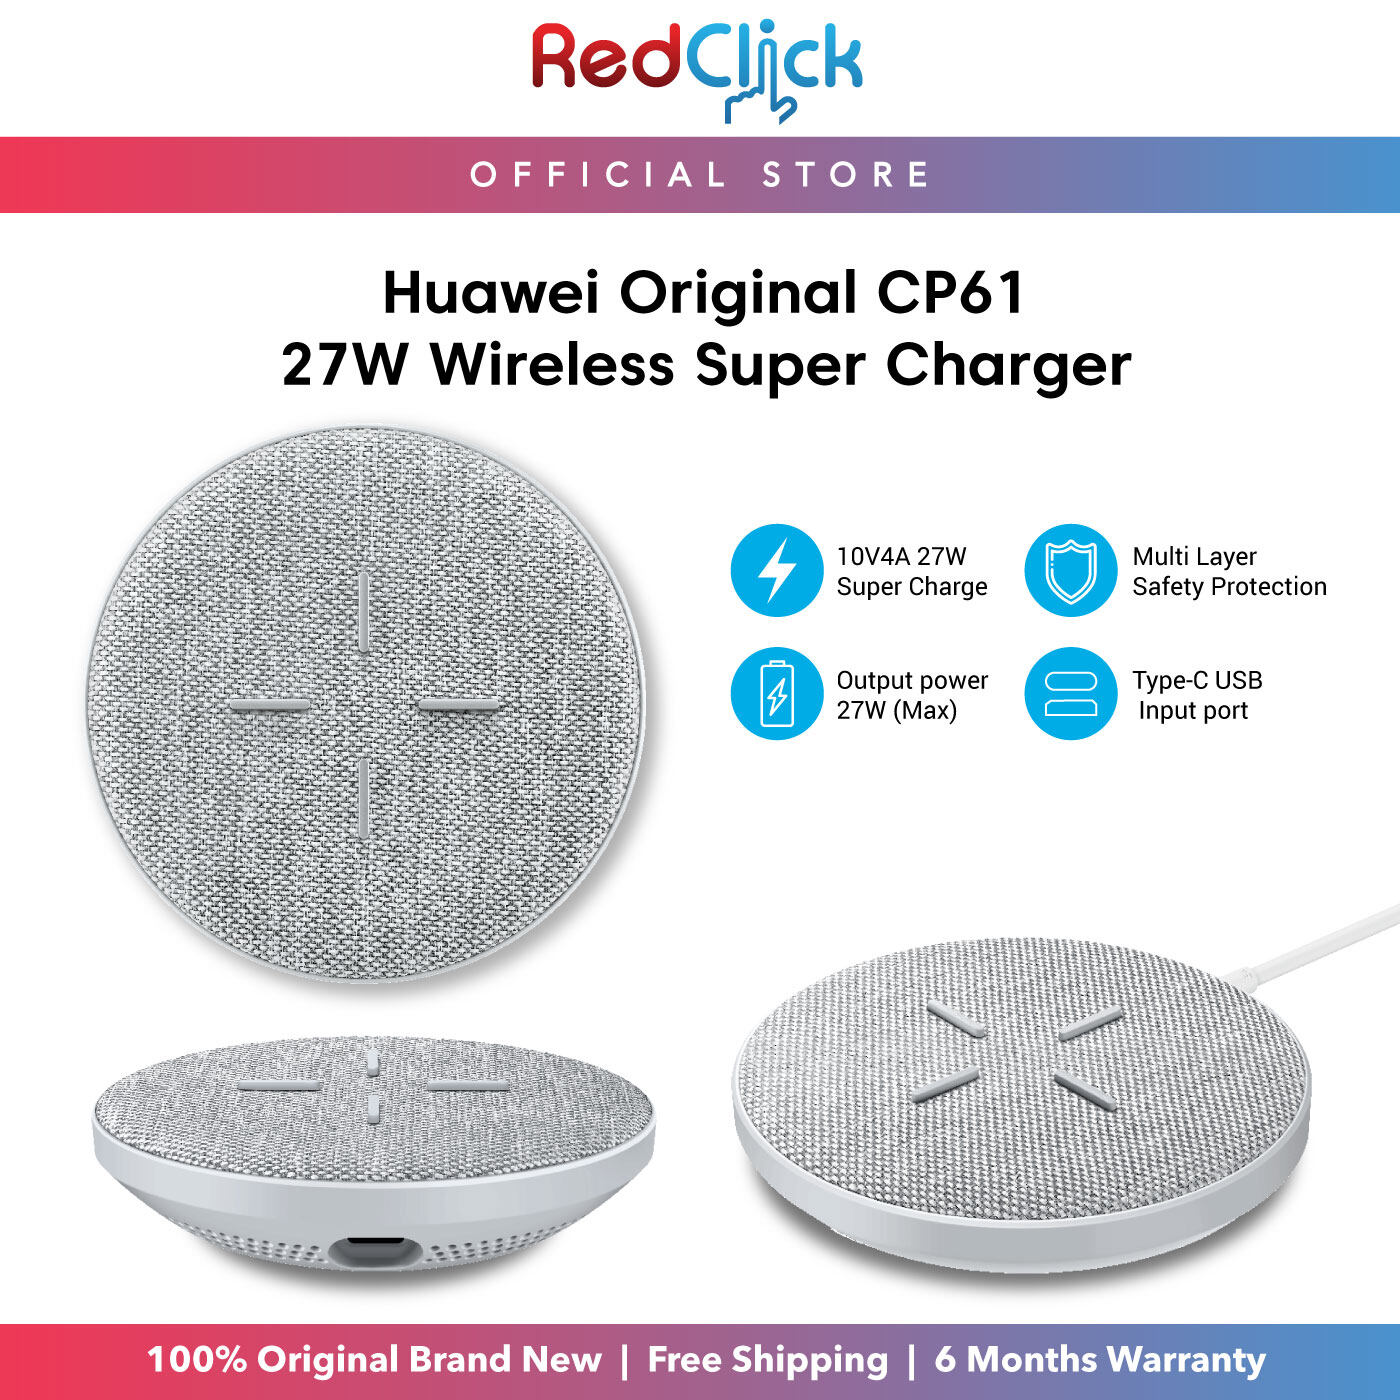 Huawei Original CP61 27W Wireless Super Charger